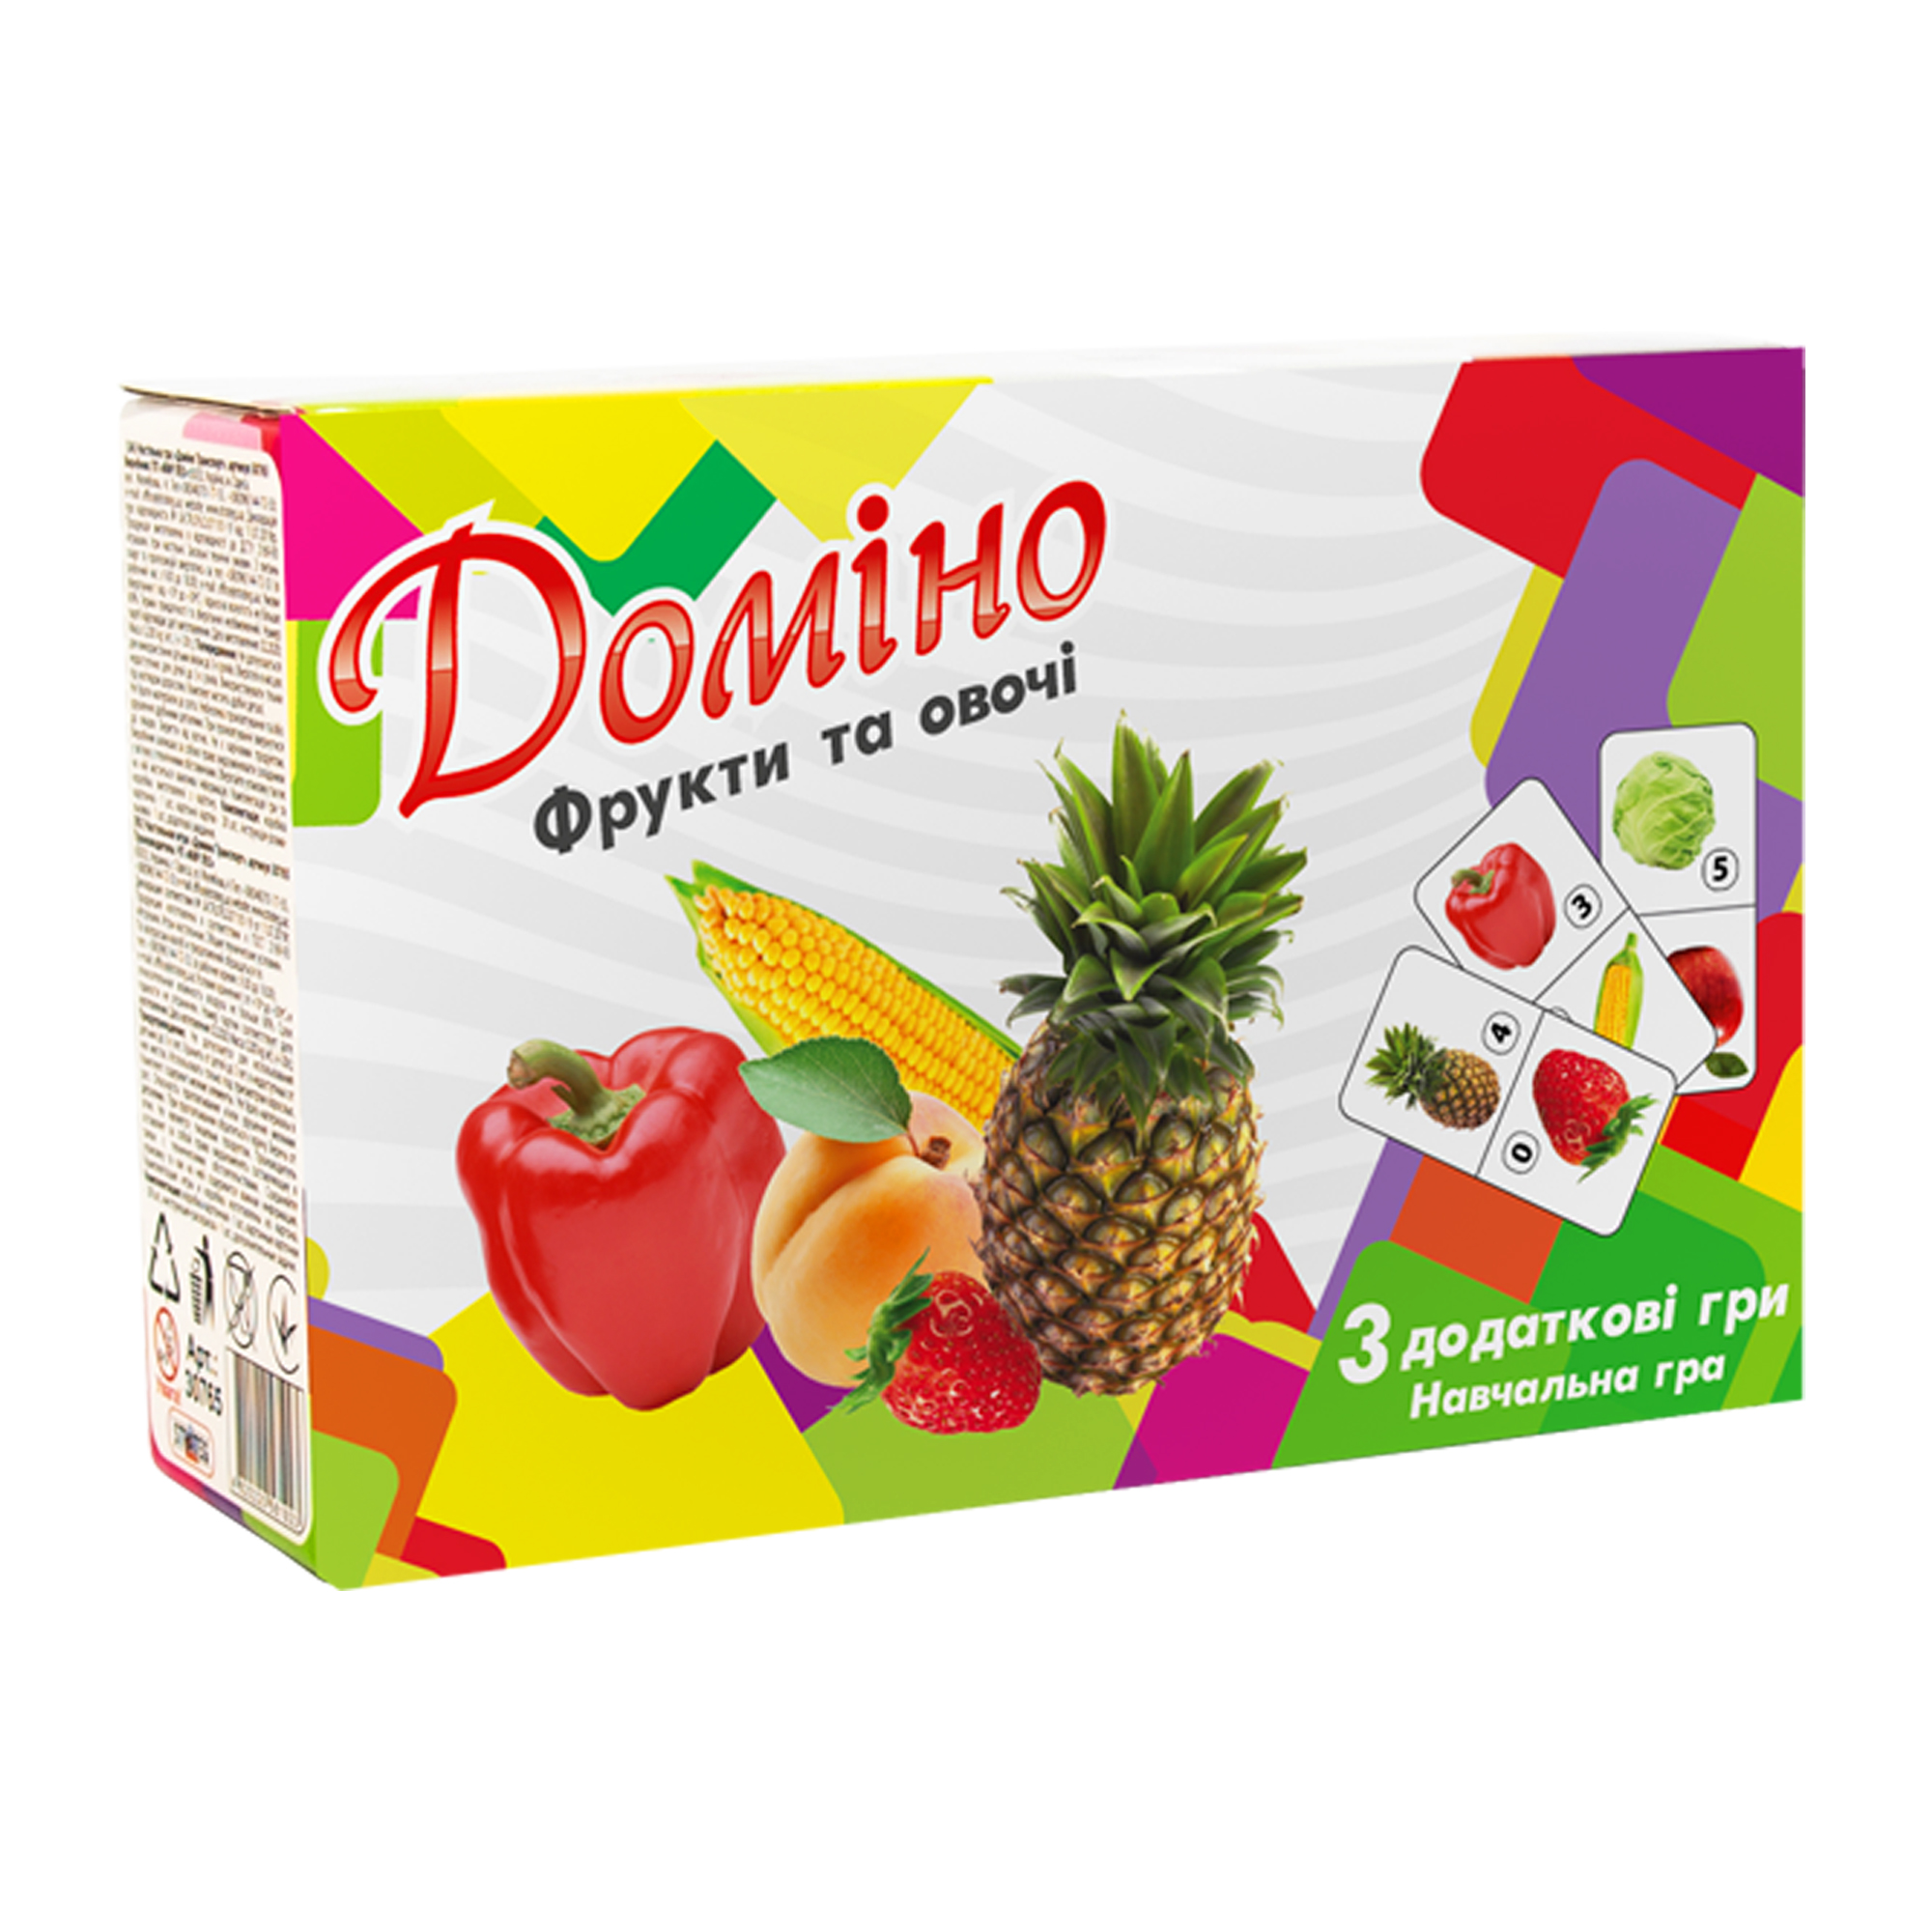 Domino "Fruits on vegetables" (ukr.) (30764)